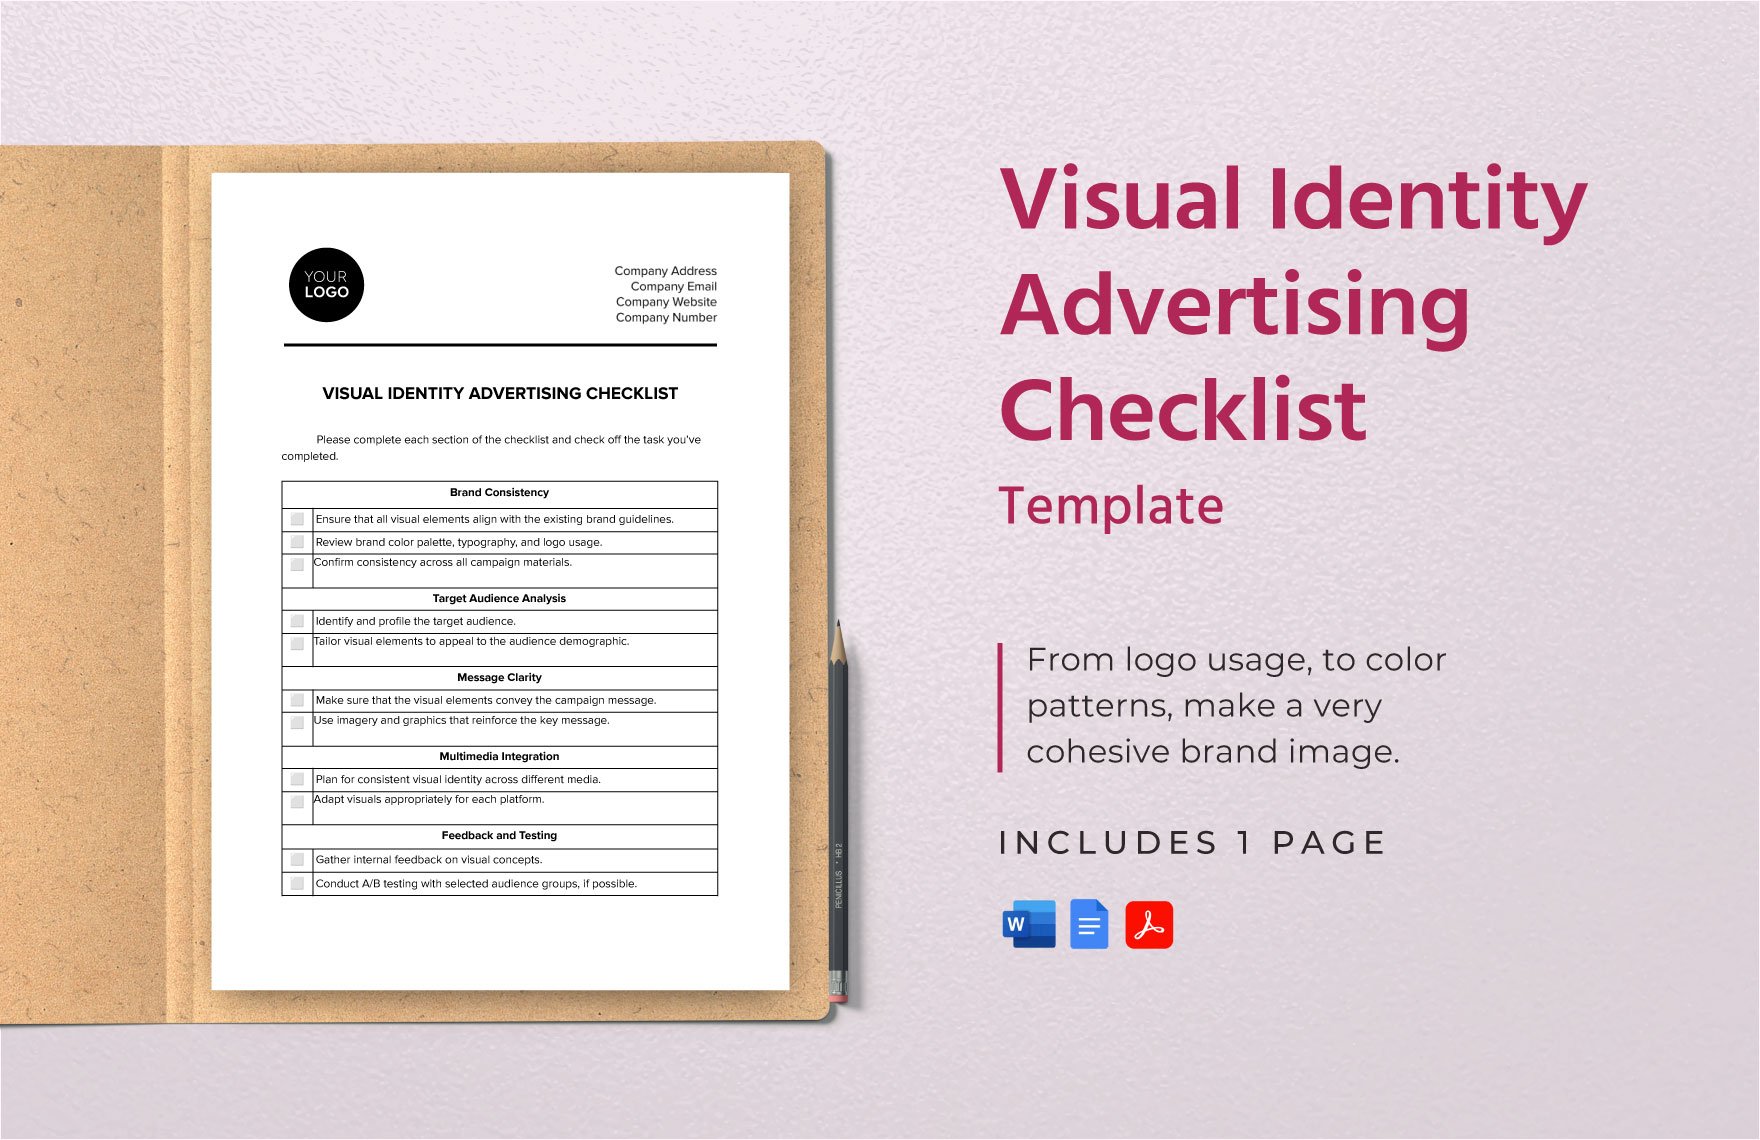 Visual Identity Advertising Checklist Template in Word, Google Docs, PDF